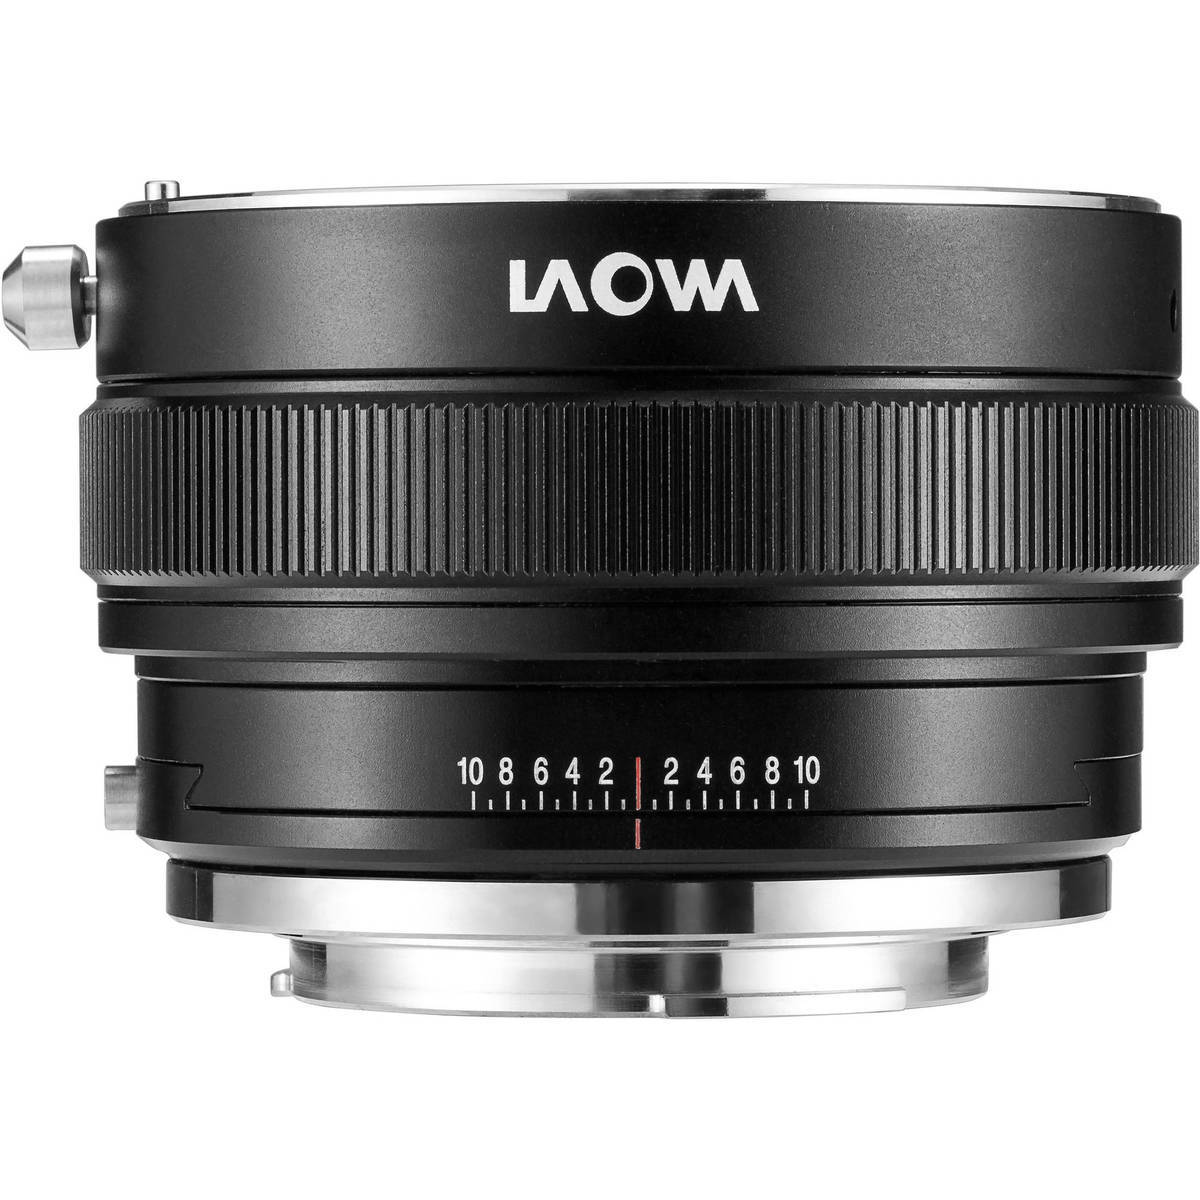 LAOWA Lens Magic Shift Converter (MSC) Nikon